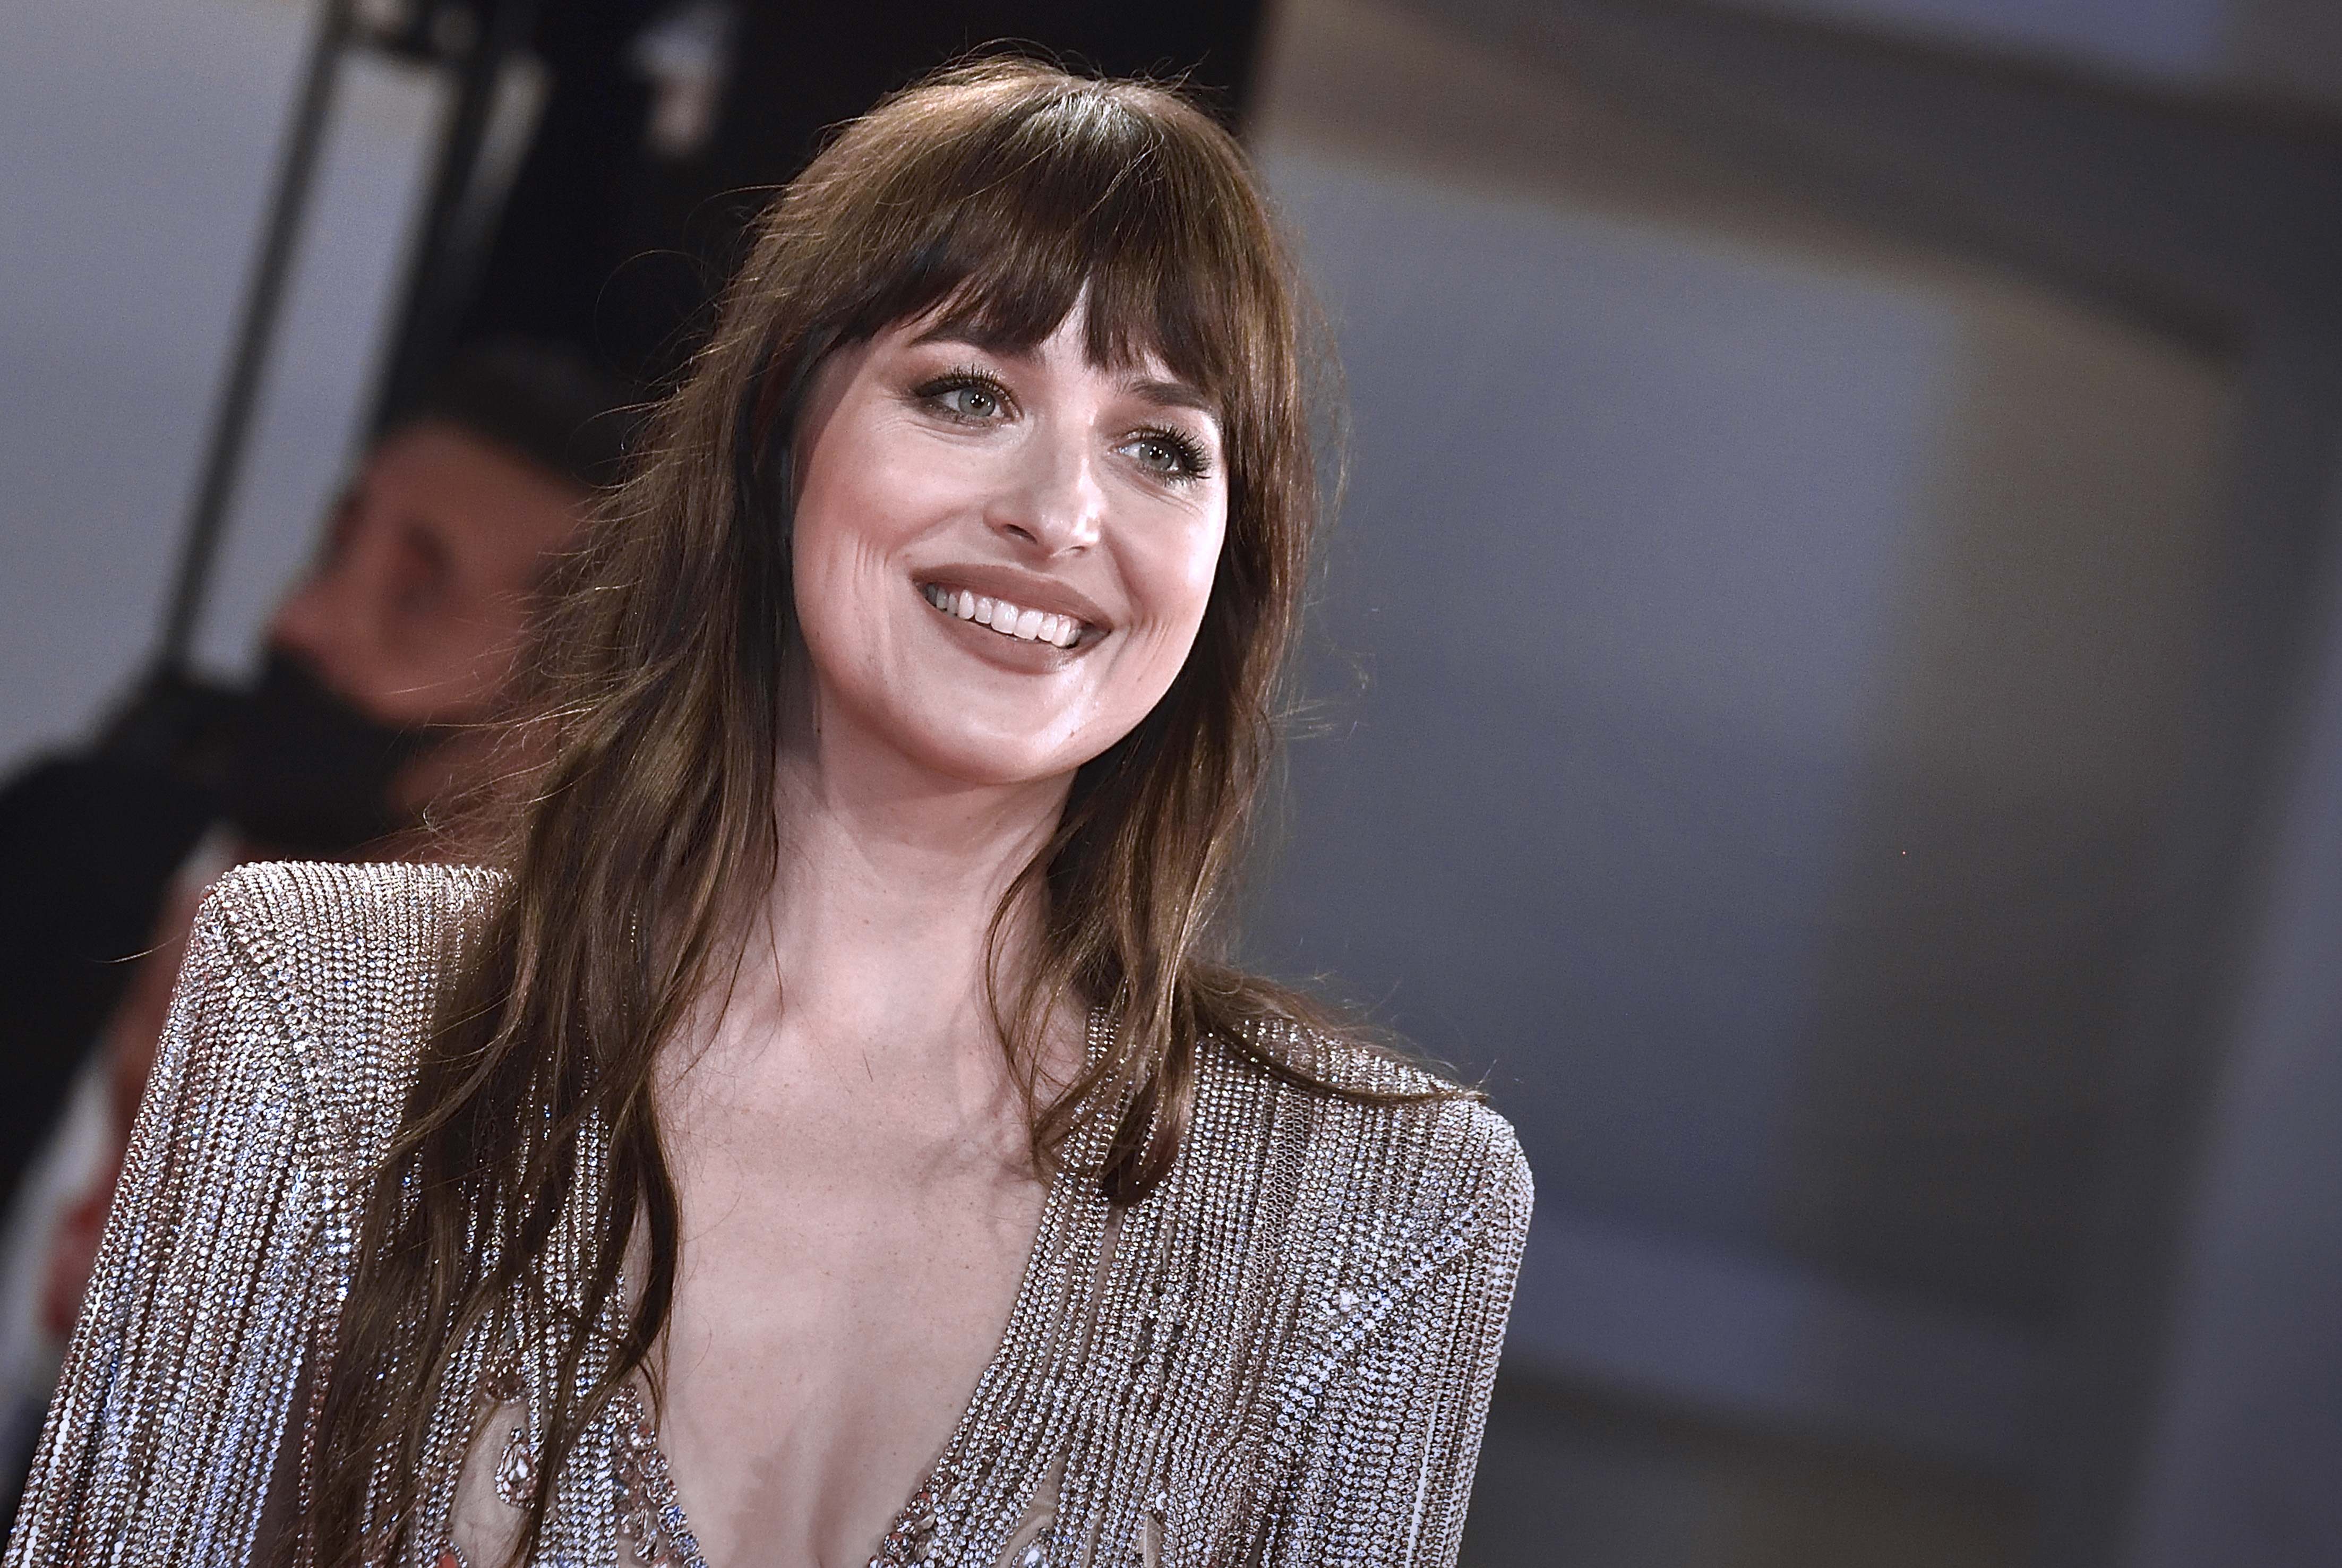 Dakota Johnson at the 78th Venice International Film Festival in Venice, Italy on September 3, 2021 | Source: Getty Images